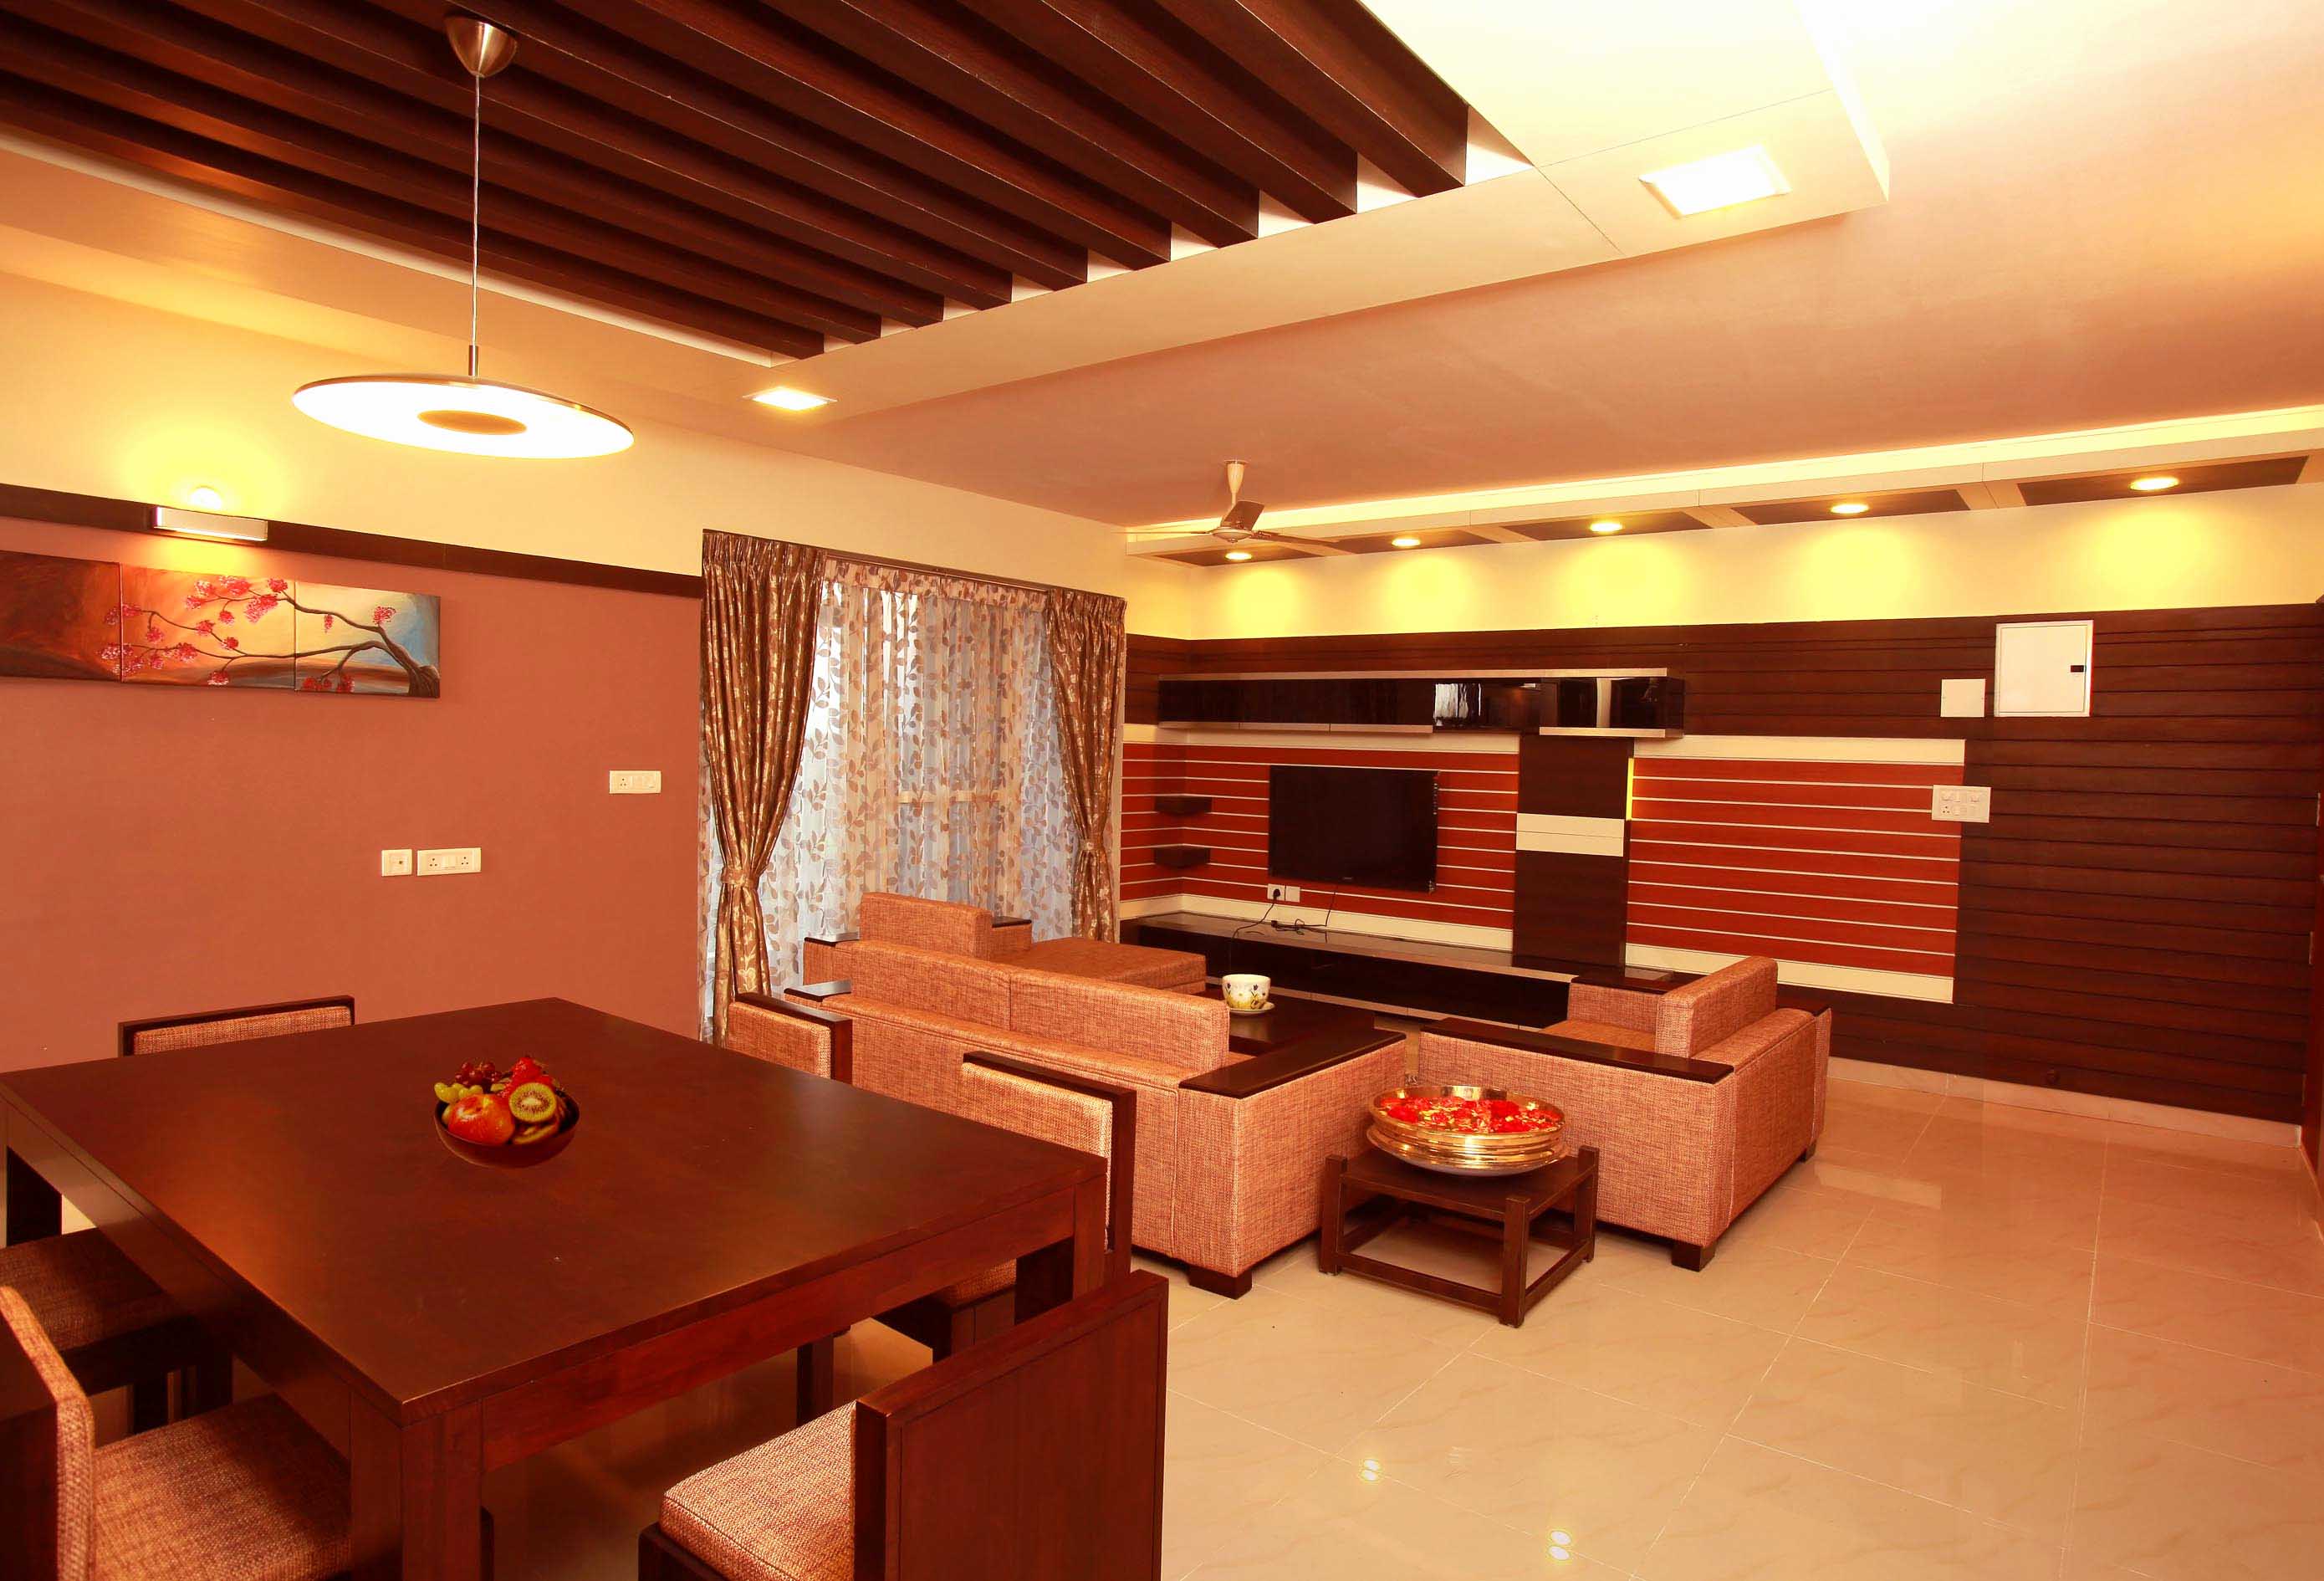 one room kitchen interior design india